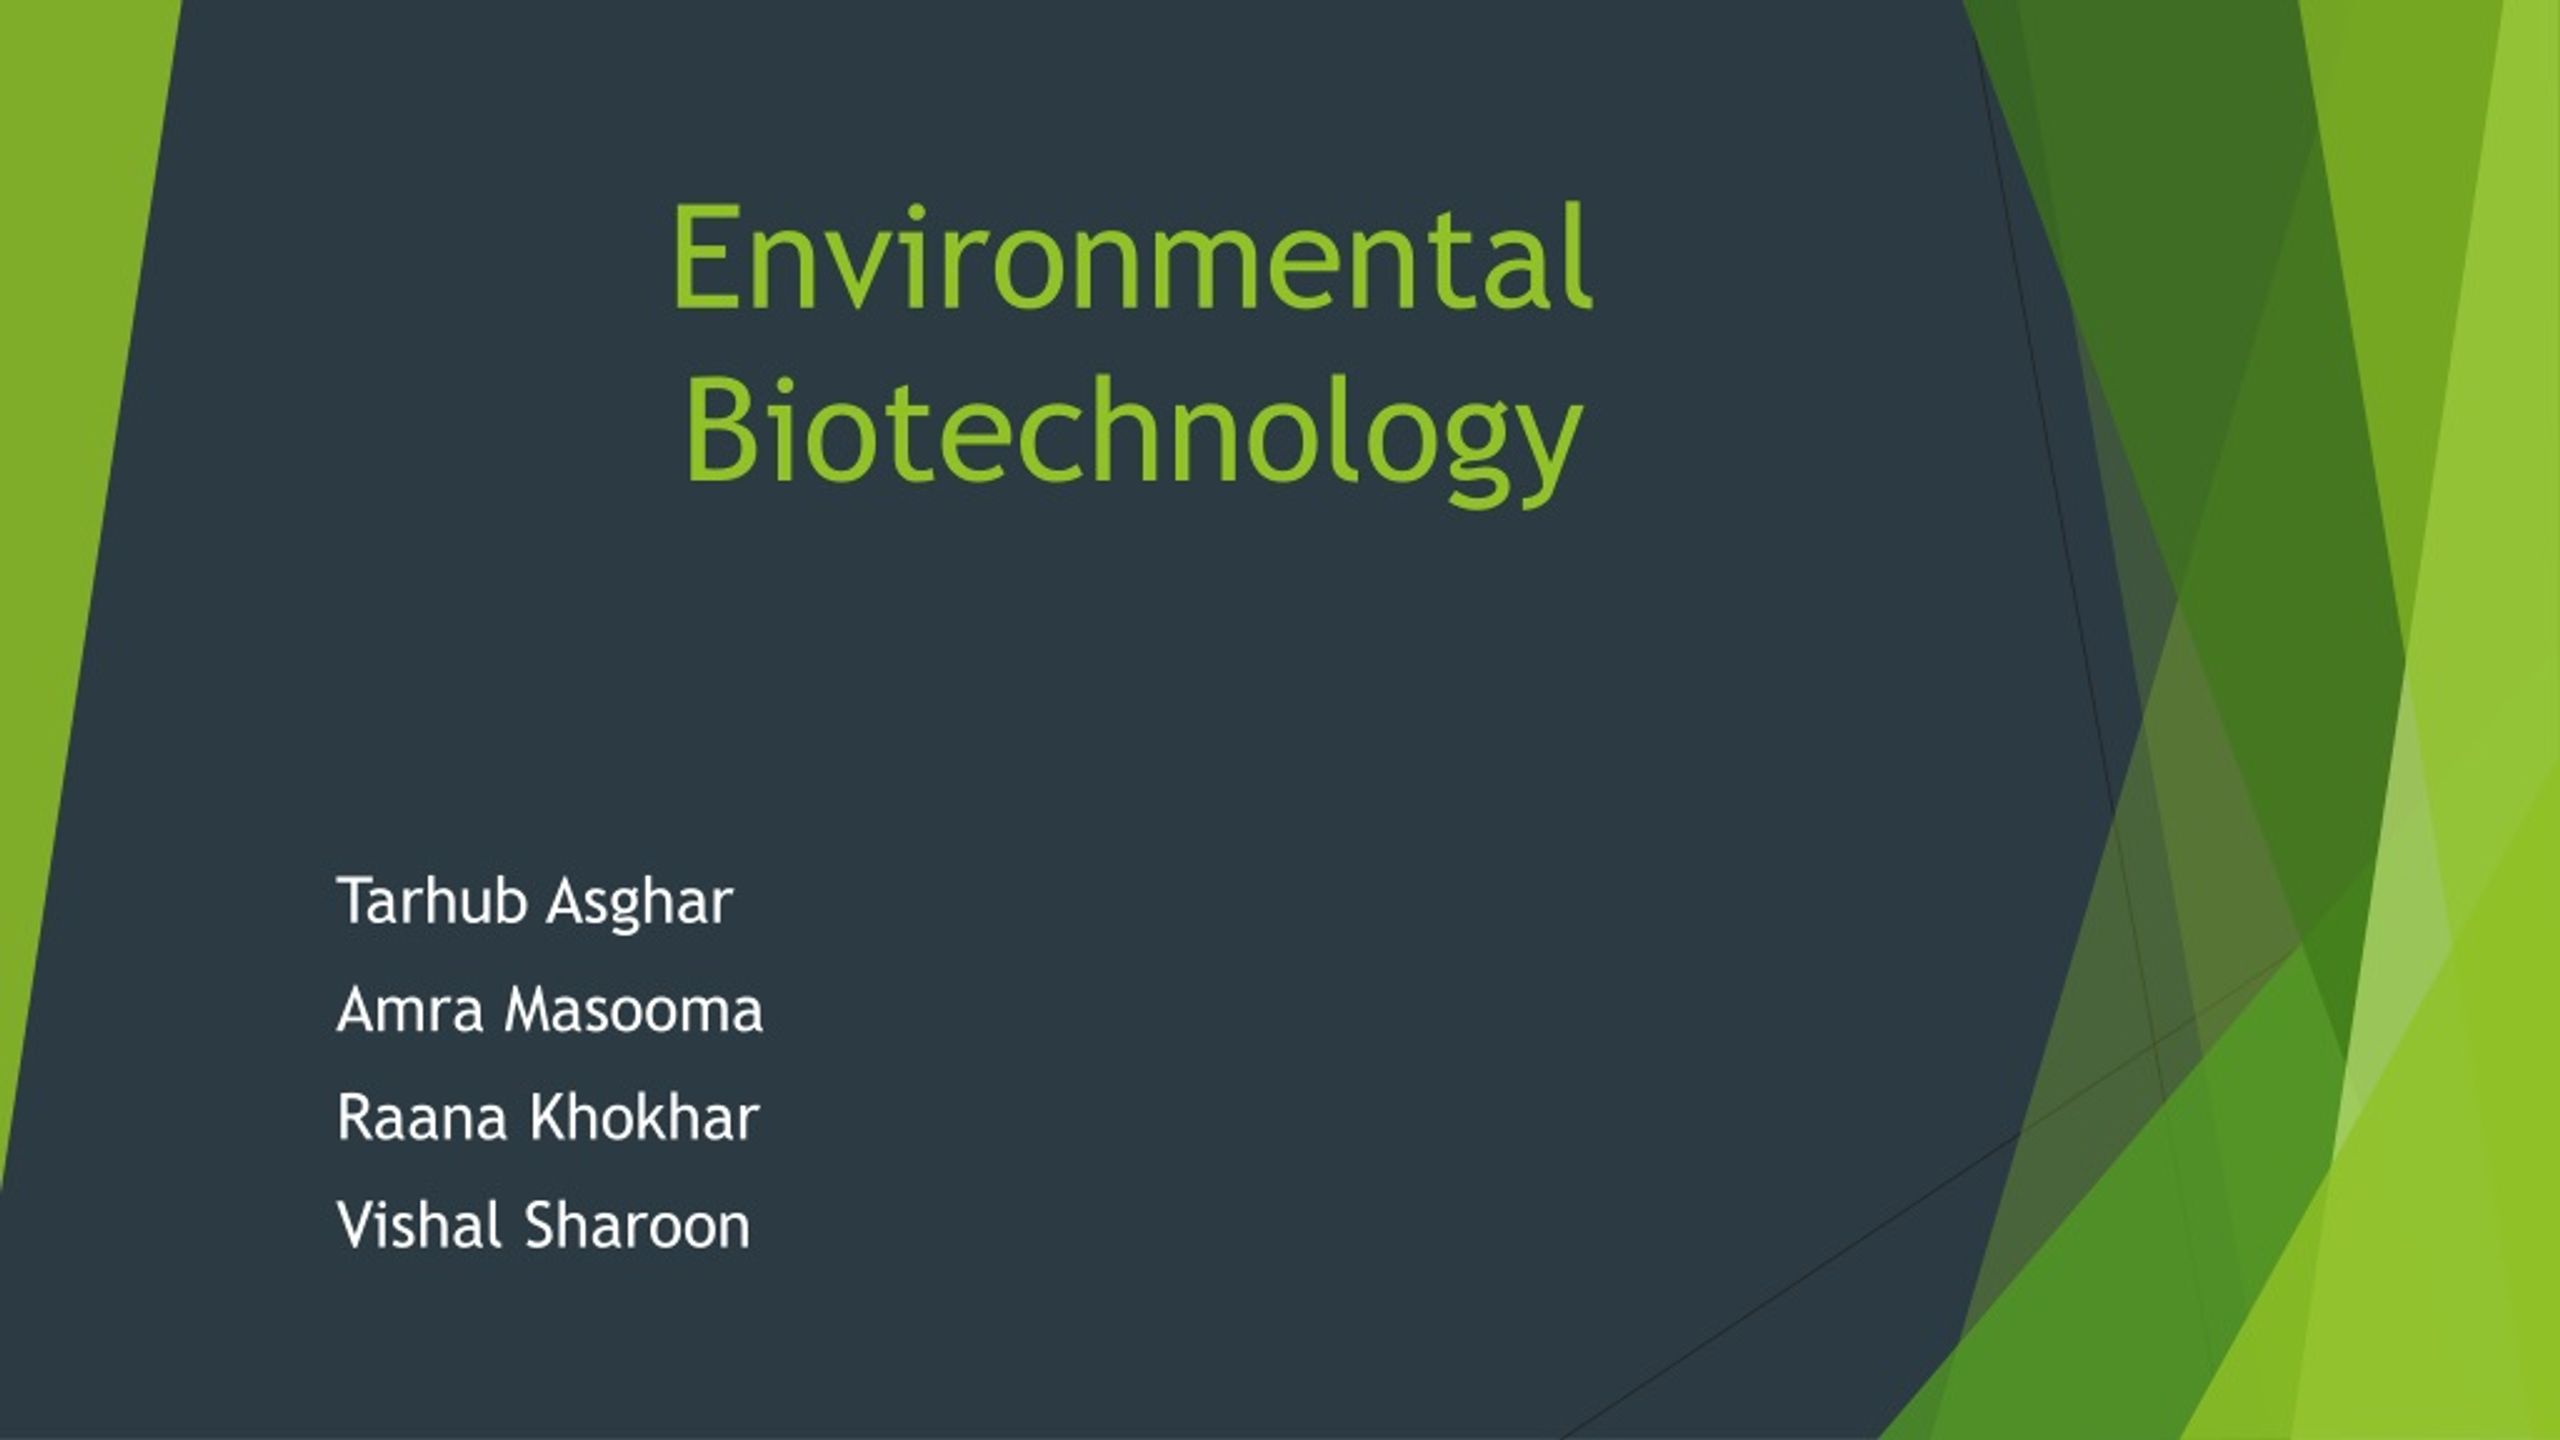 presentation on environmental biotechnology topics